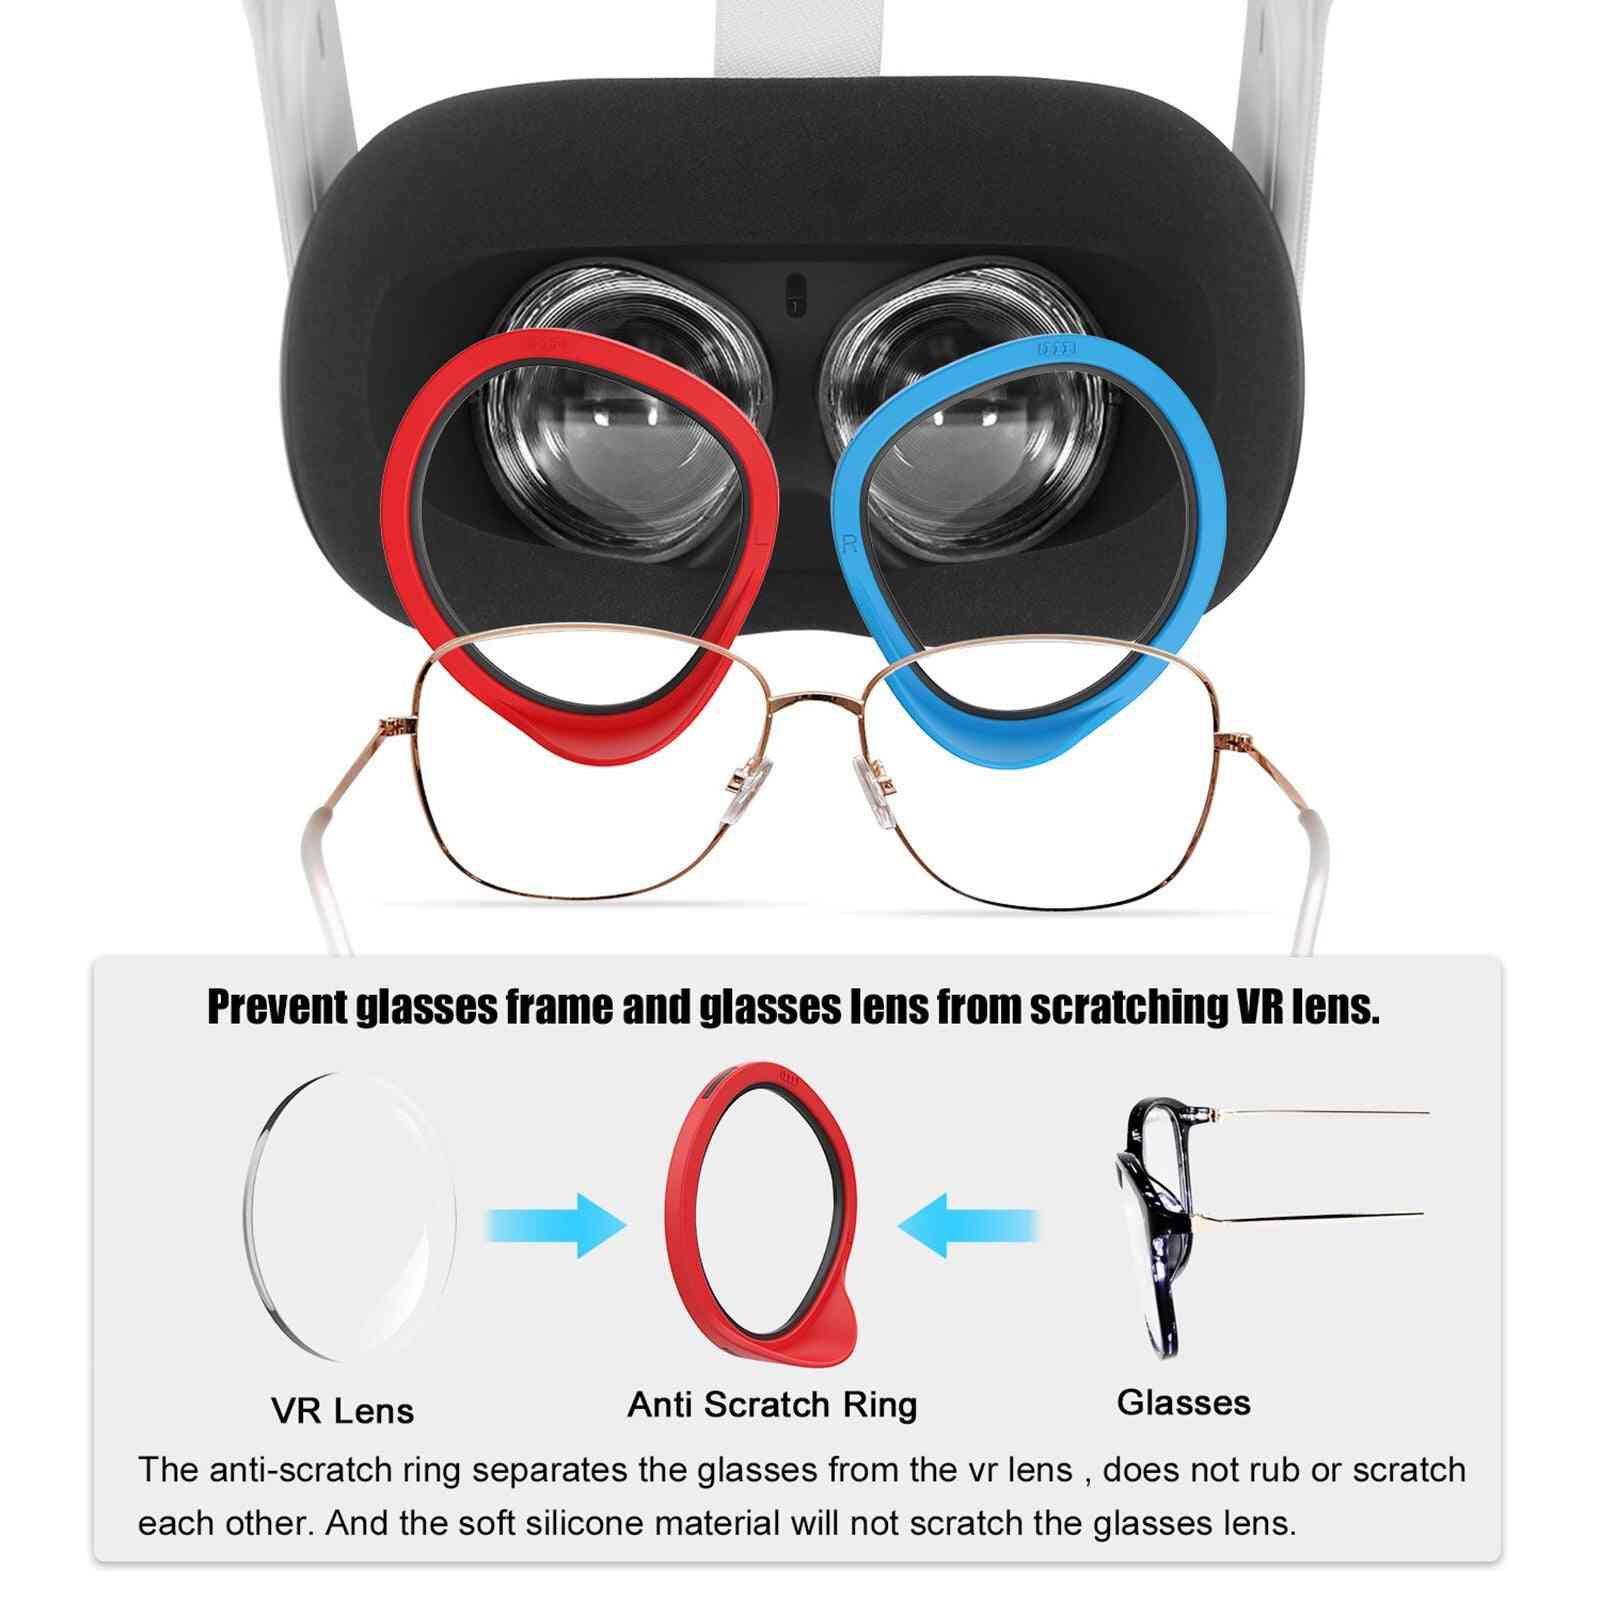 Linse anti-ripe ring vr beskytter briller mot ripe innfatning